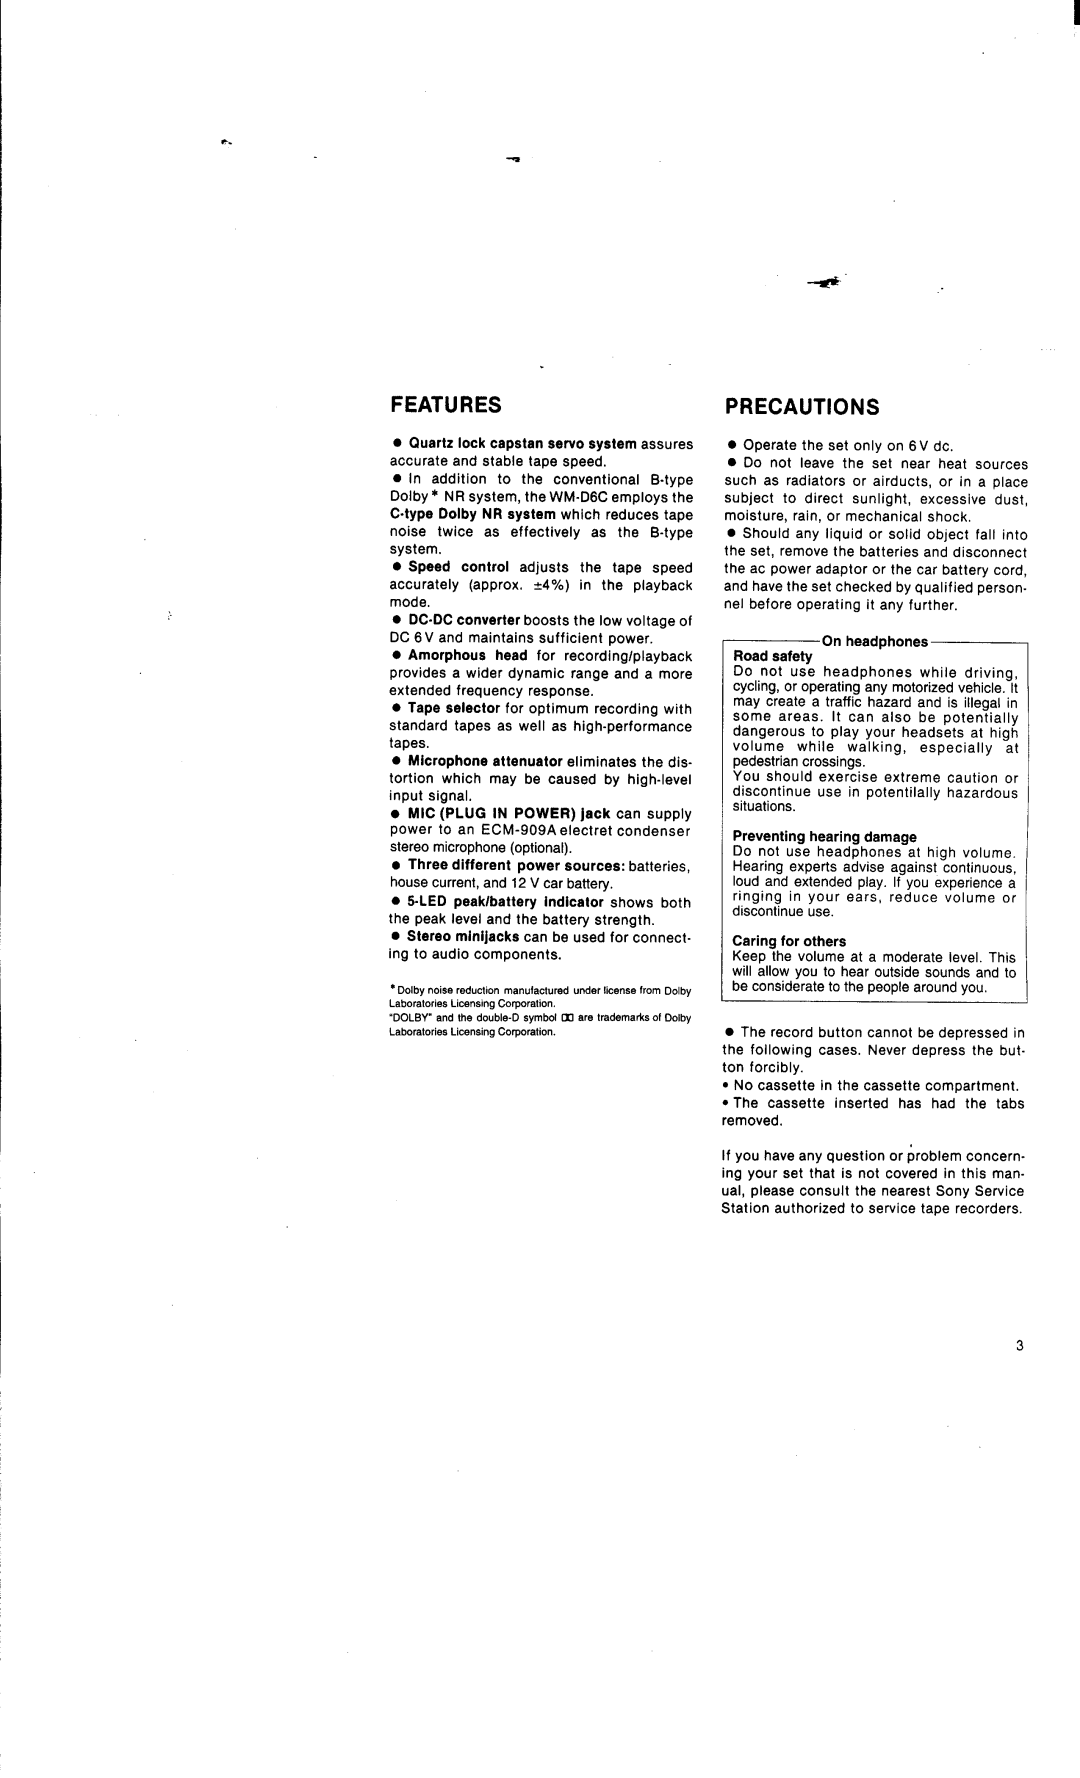 Sony WM-D6C manual 